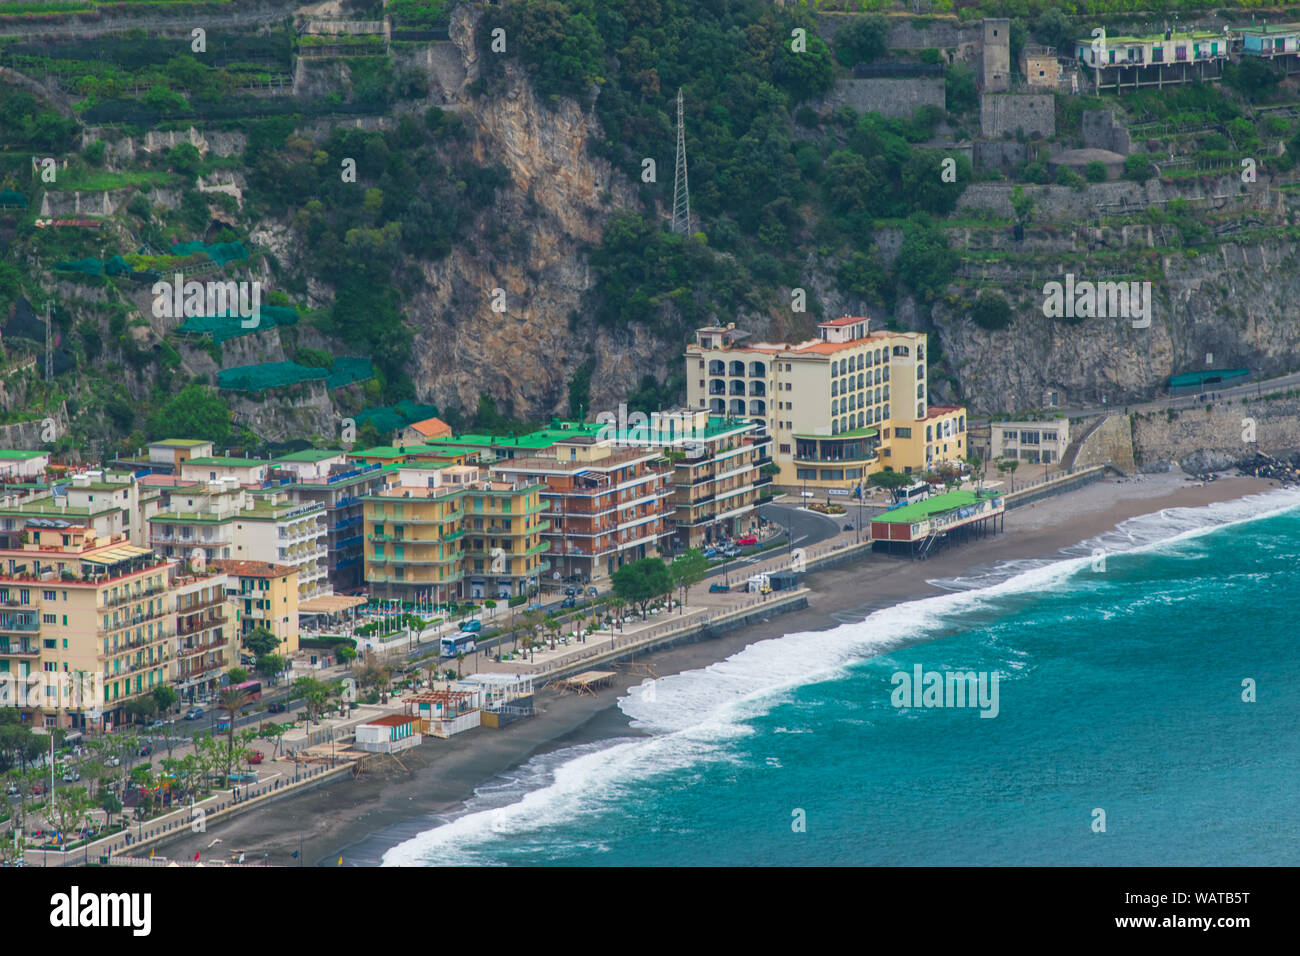 Sea, Beach, and Mountains view from the Garden of Villa Rufolo, historic center of Ravello, Amalfi Coast of Italy Stock Photo